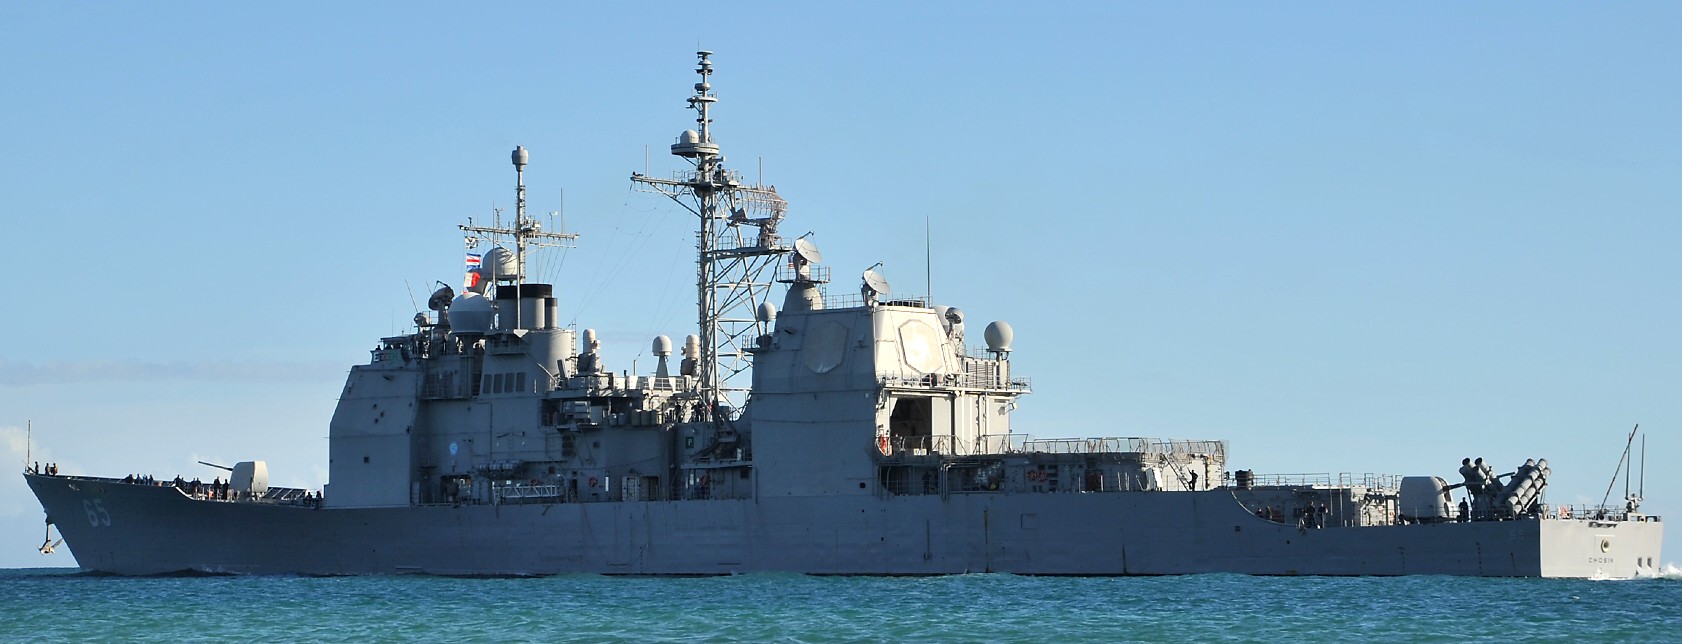 cg-65 uss chosin ticonderoga class guided missile cruiser aegis us navy 57